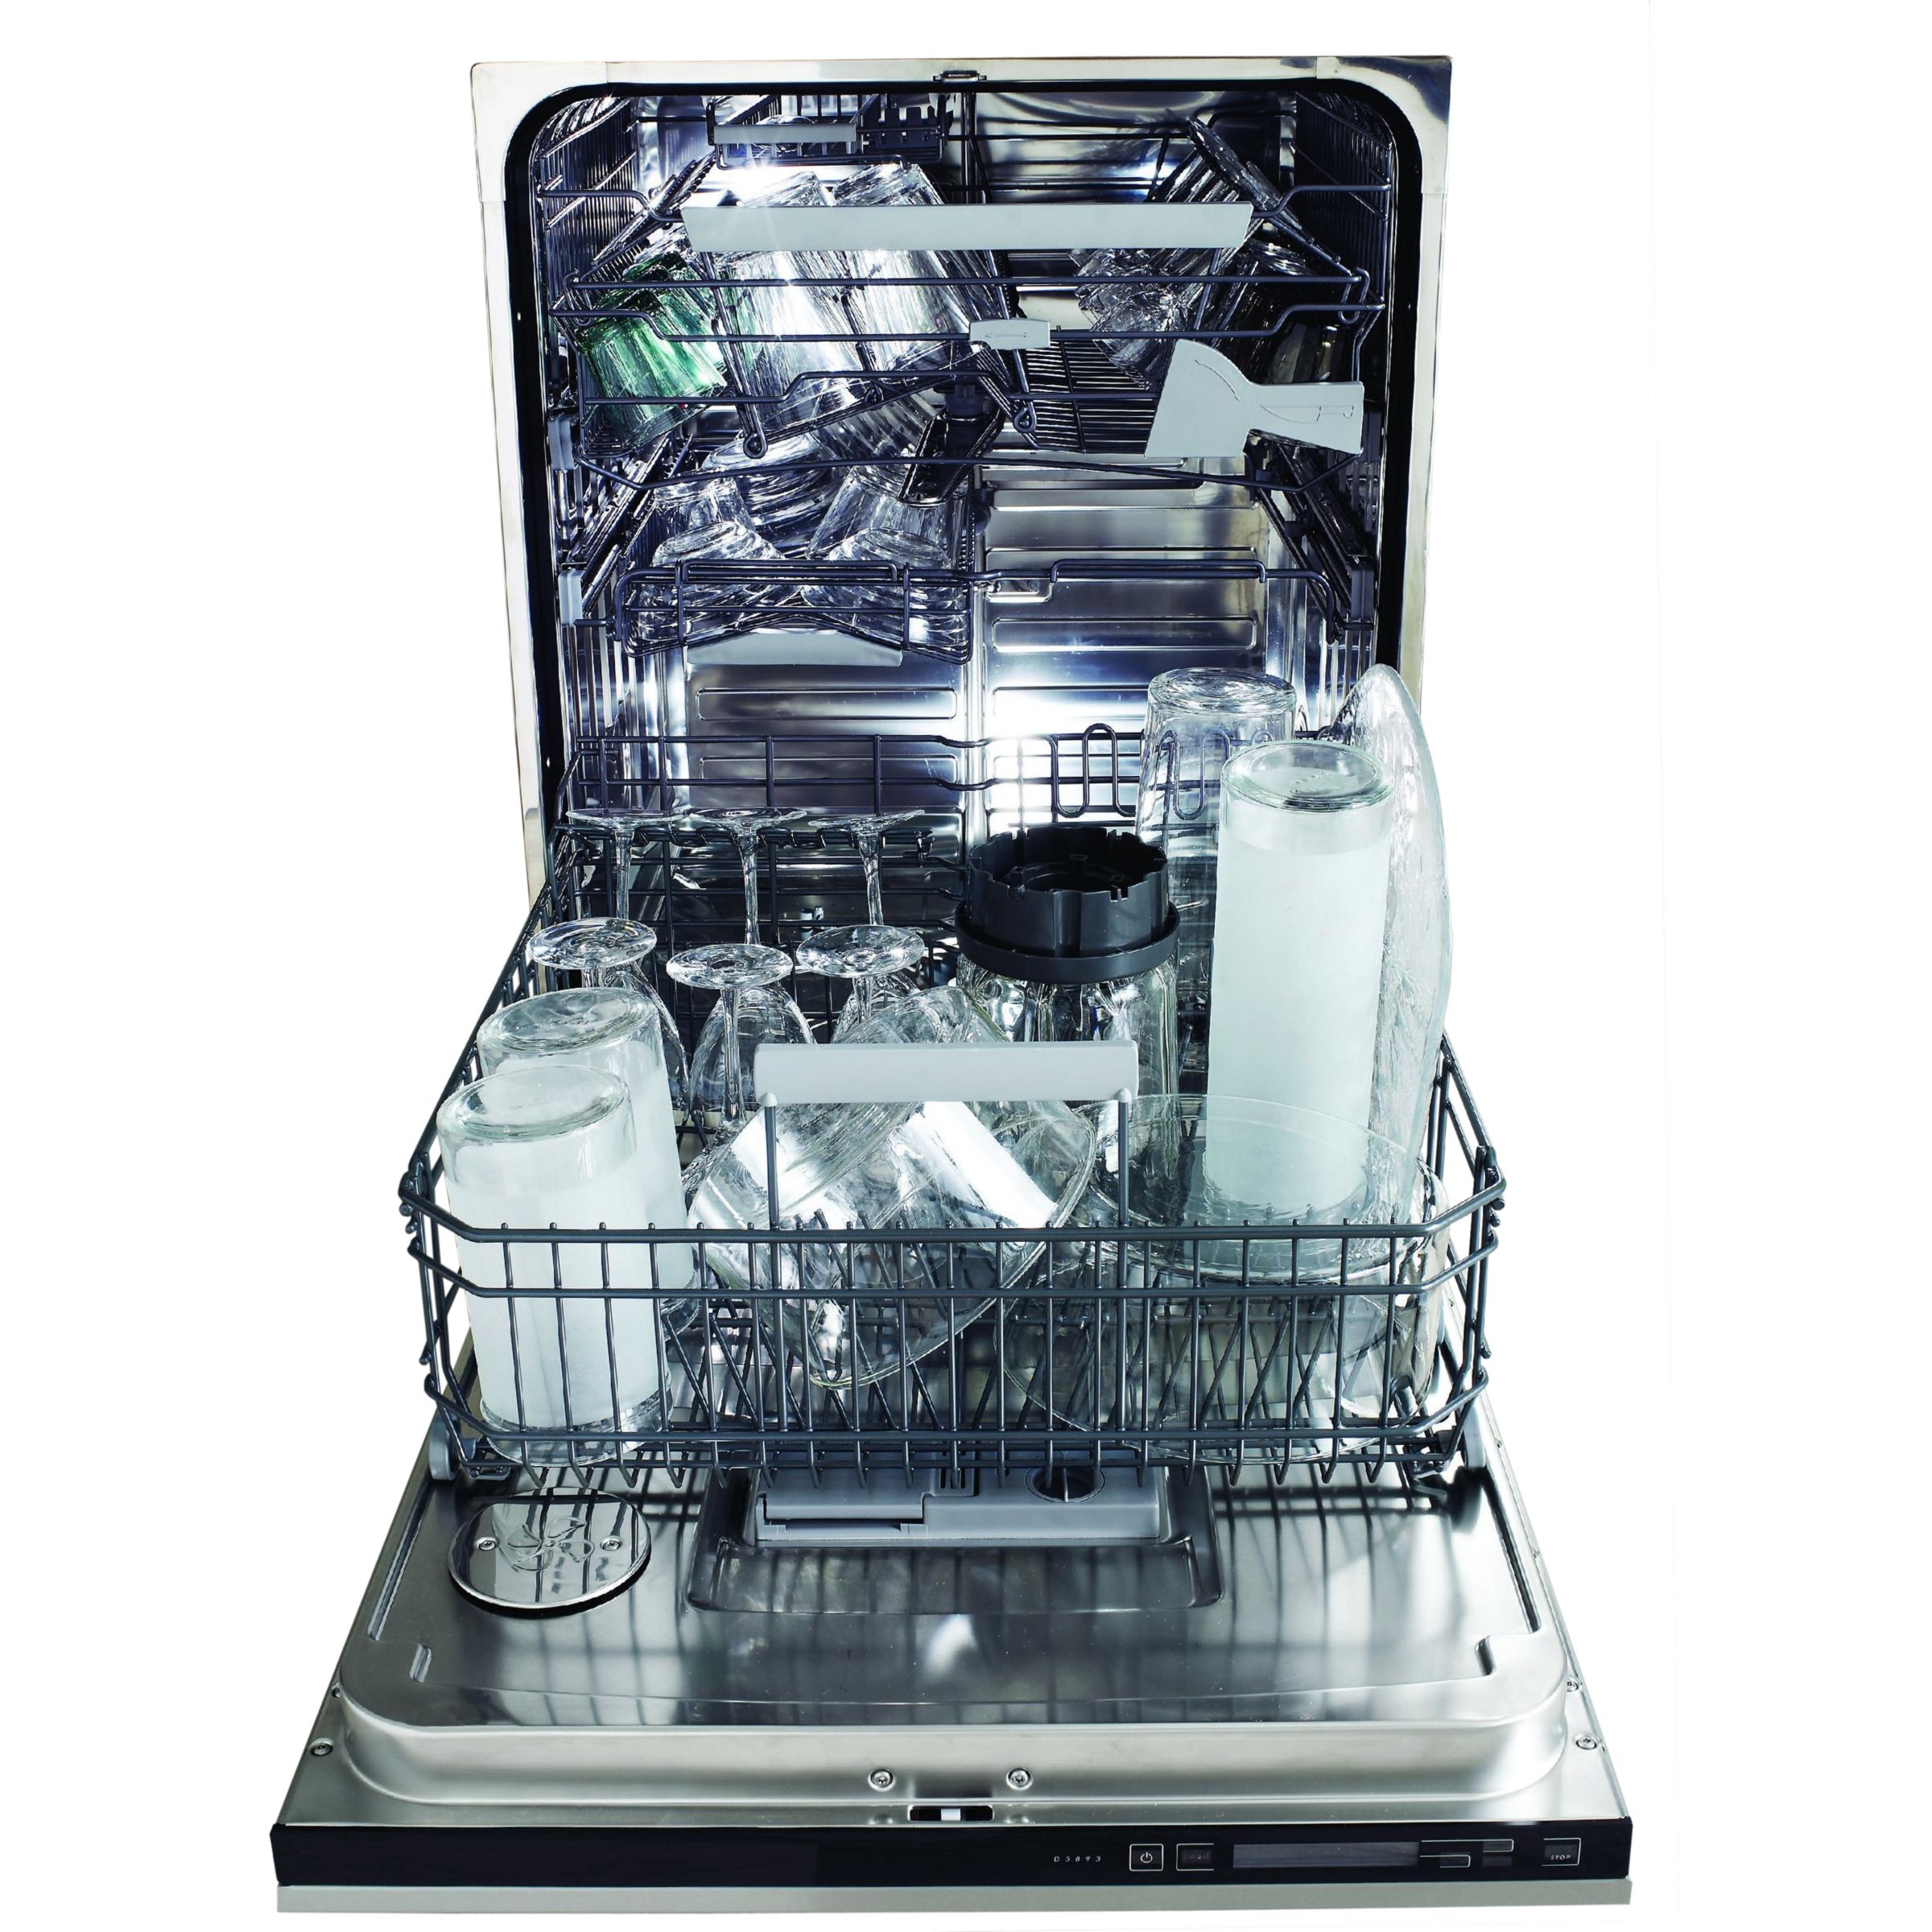 Maytag MDW171TN Integrated Dishwasher at John Lewis